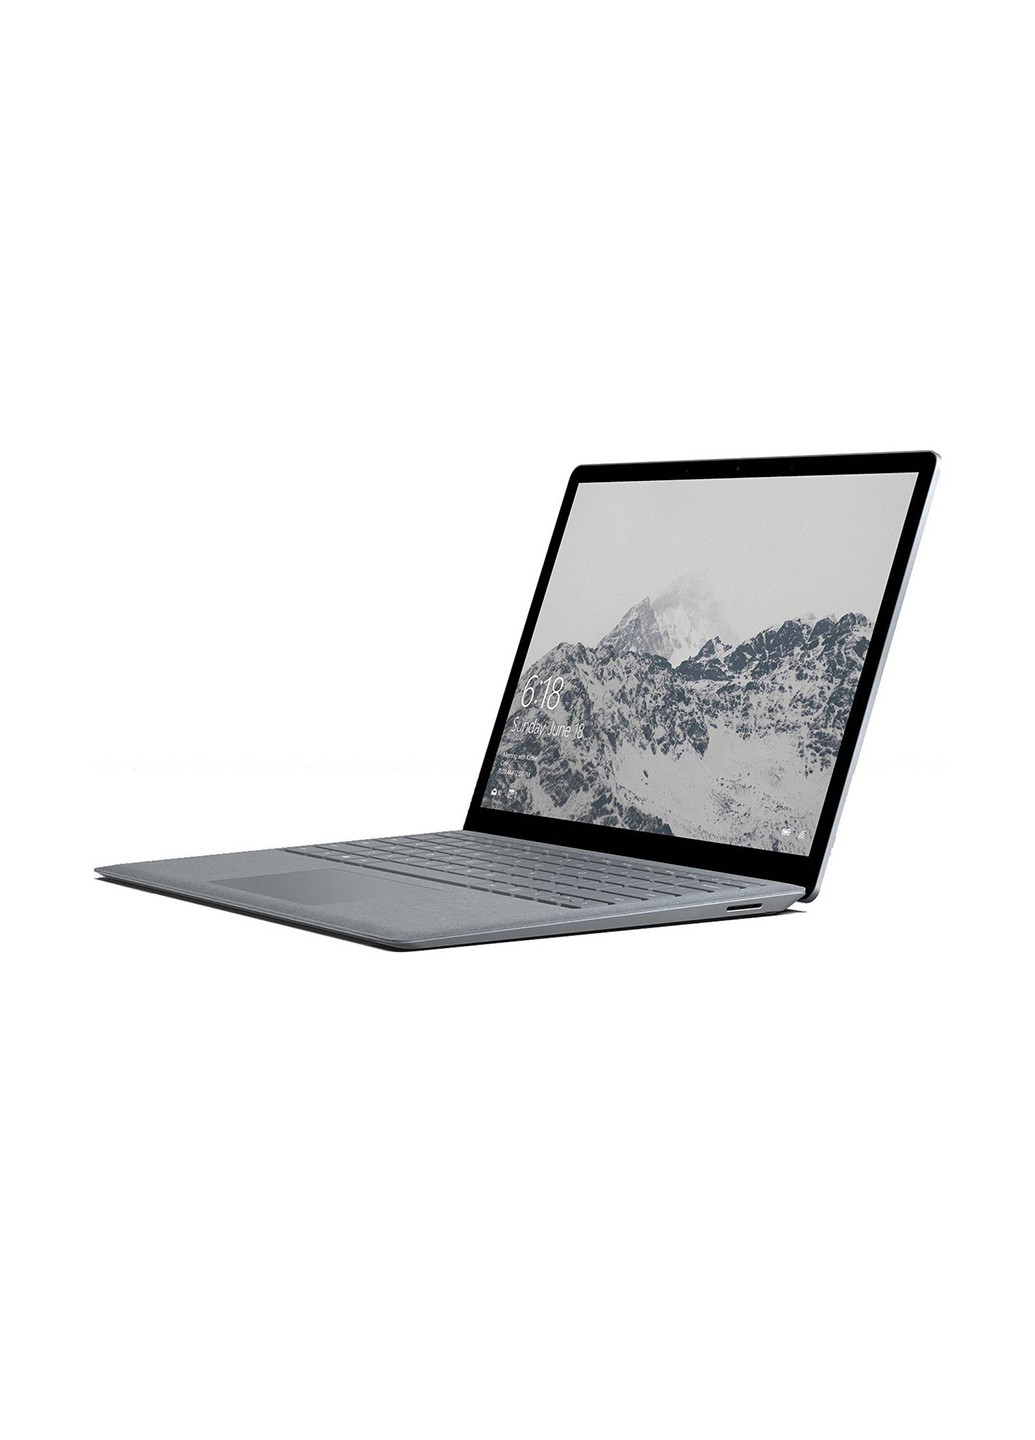 Ноутбук Microsoft surface laptop 2 (lqp-00012) silver (134810951)